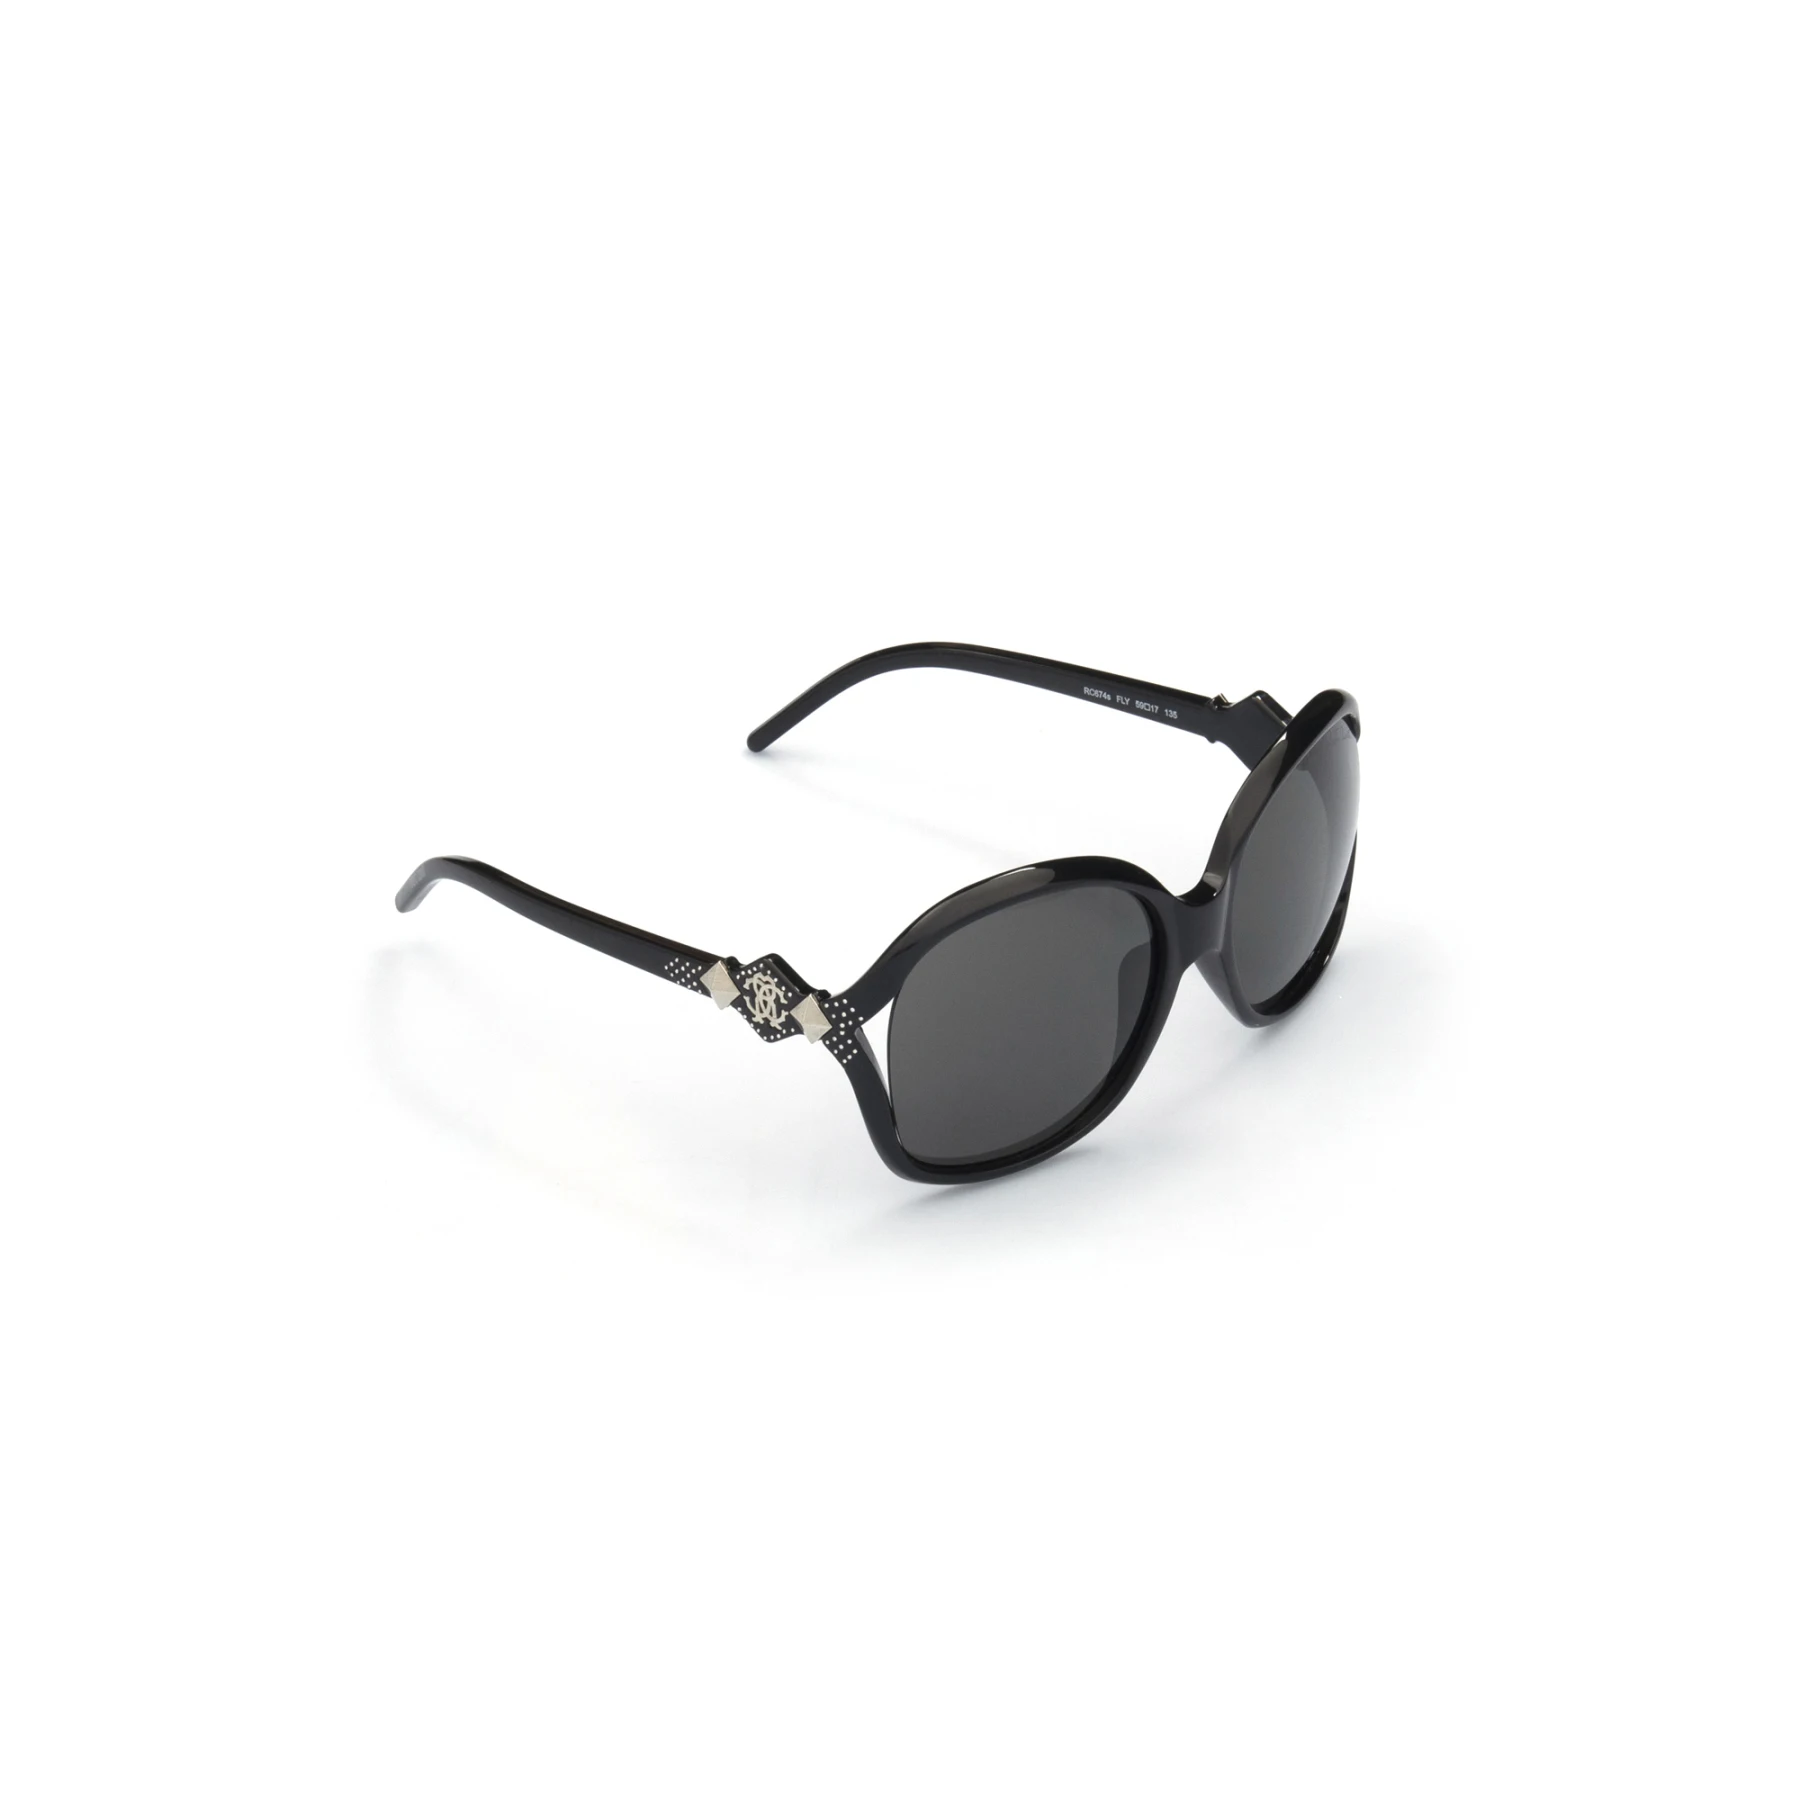 

Women's sunglasses rc 674 fly bone black organic rectangle rectangular 59-17-135 roberto cavalli